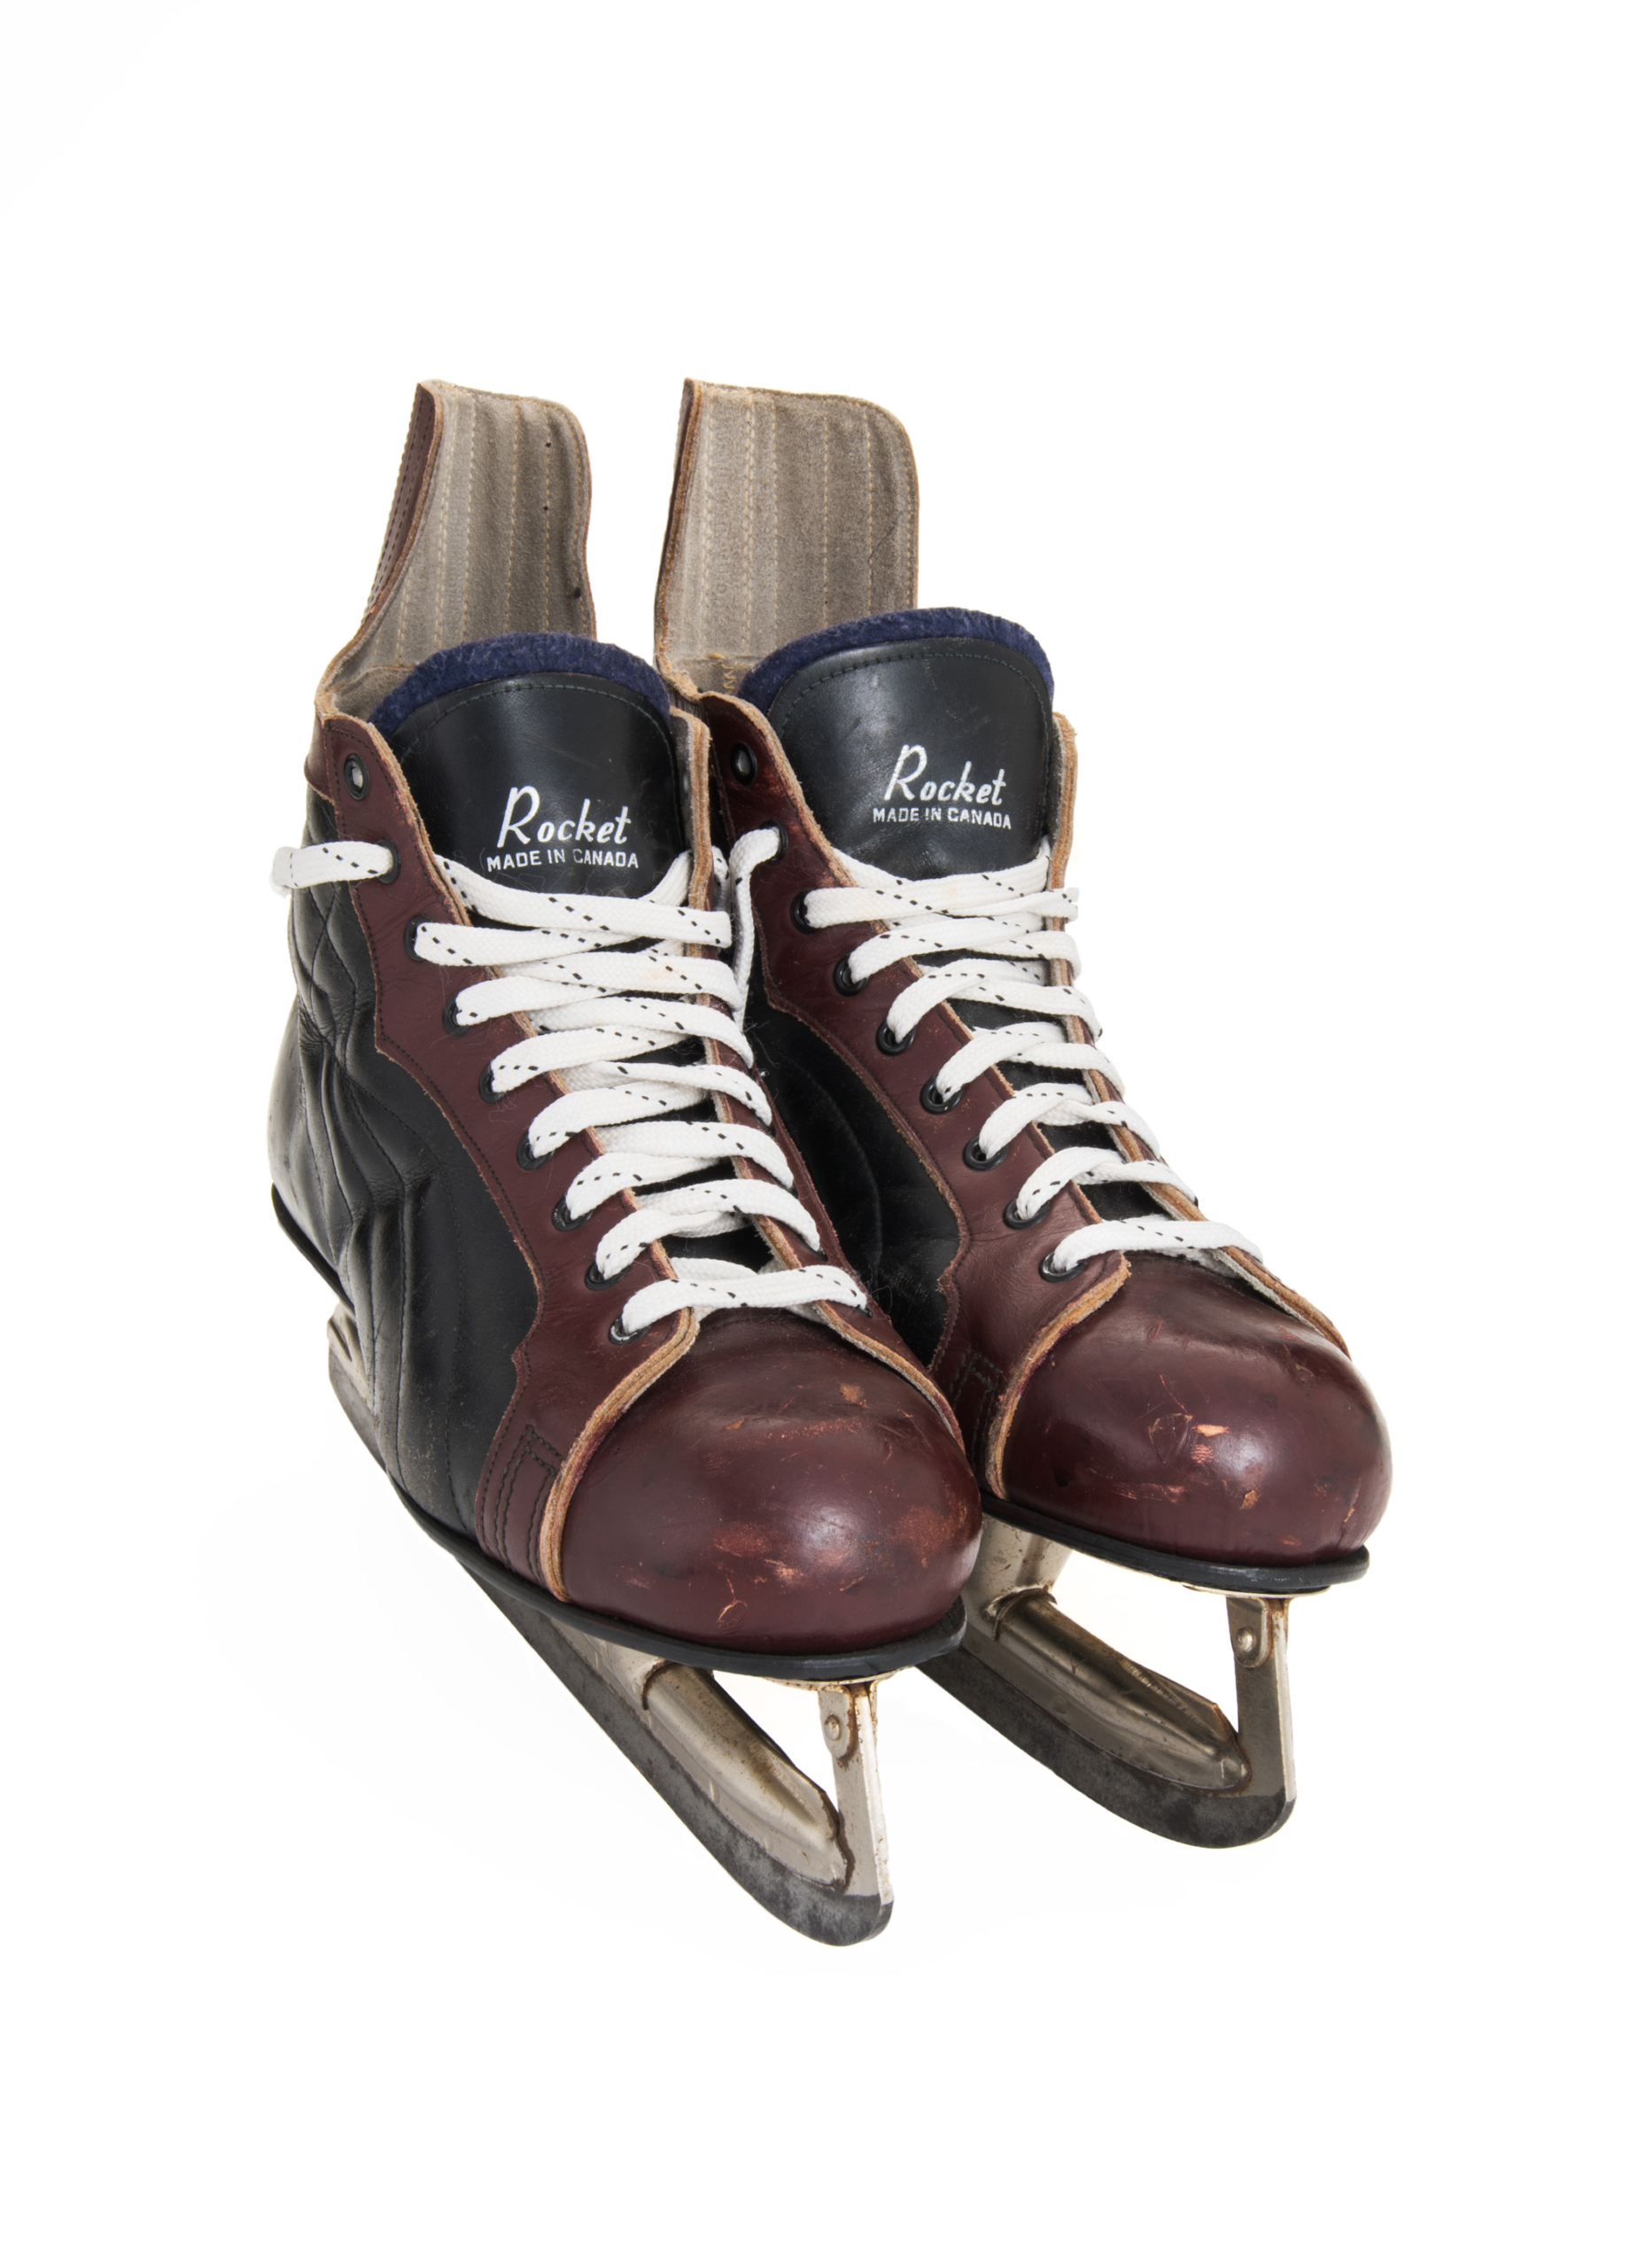 Pair of brown hockey skates